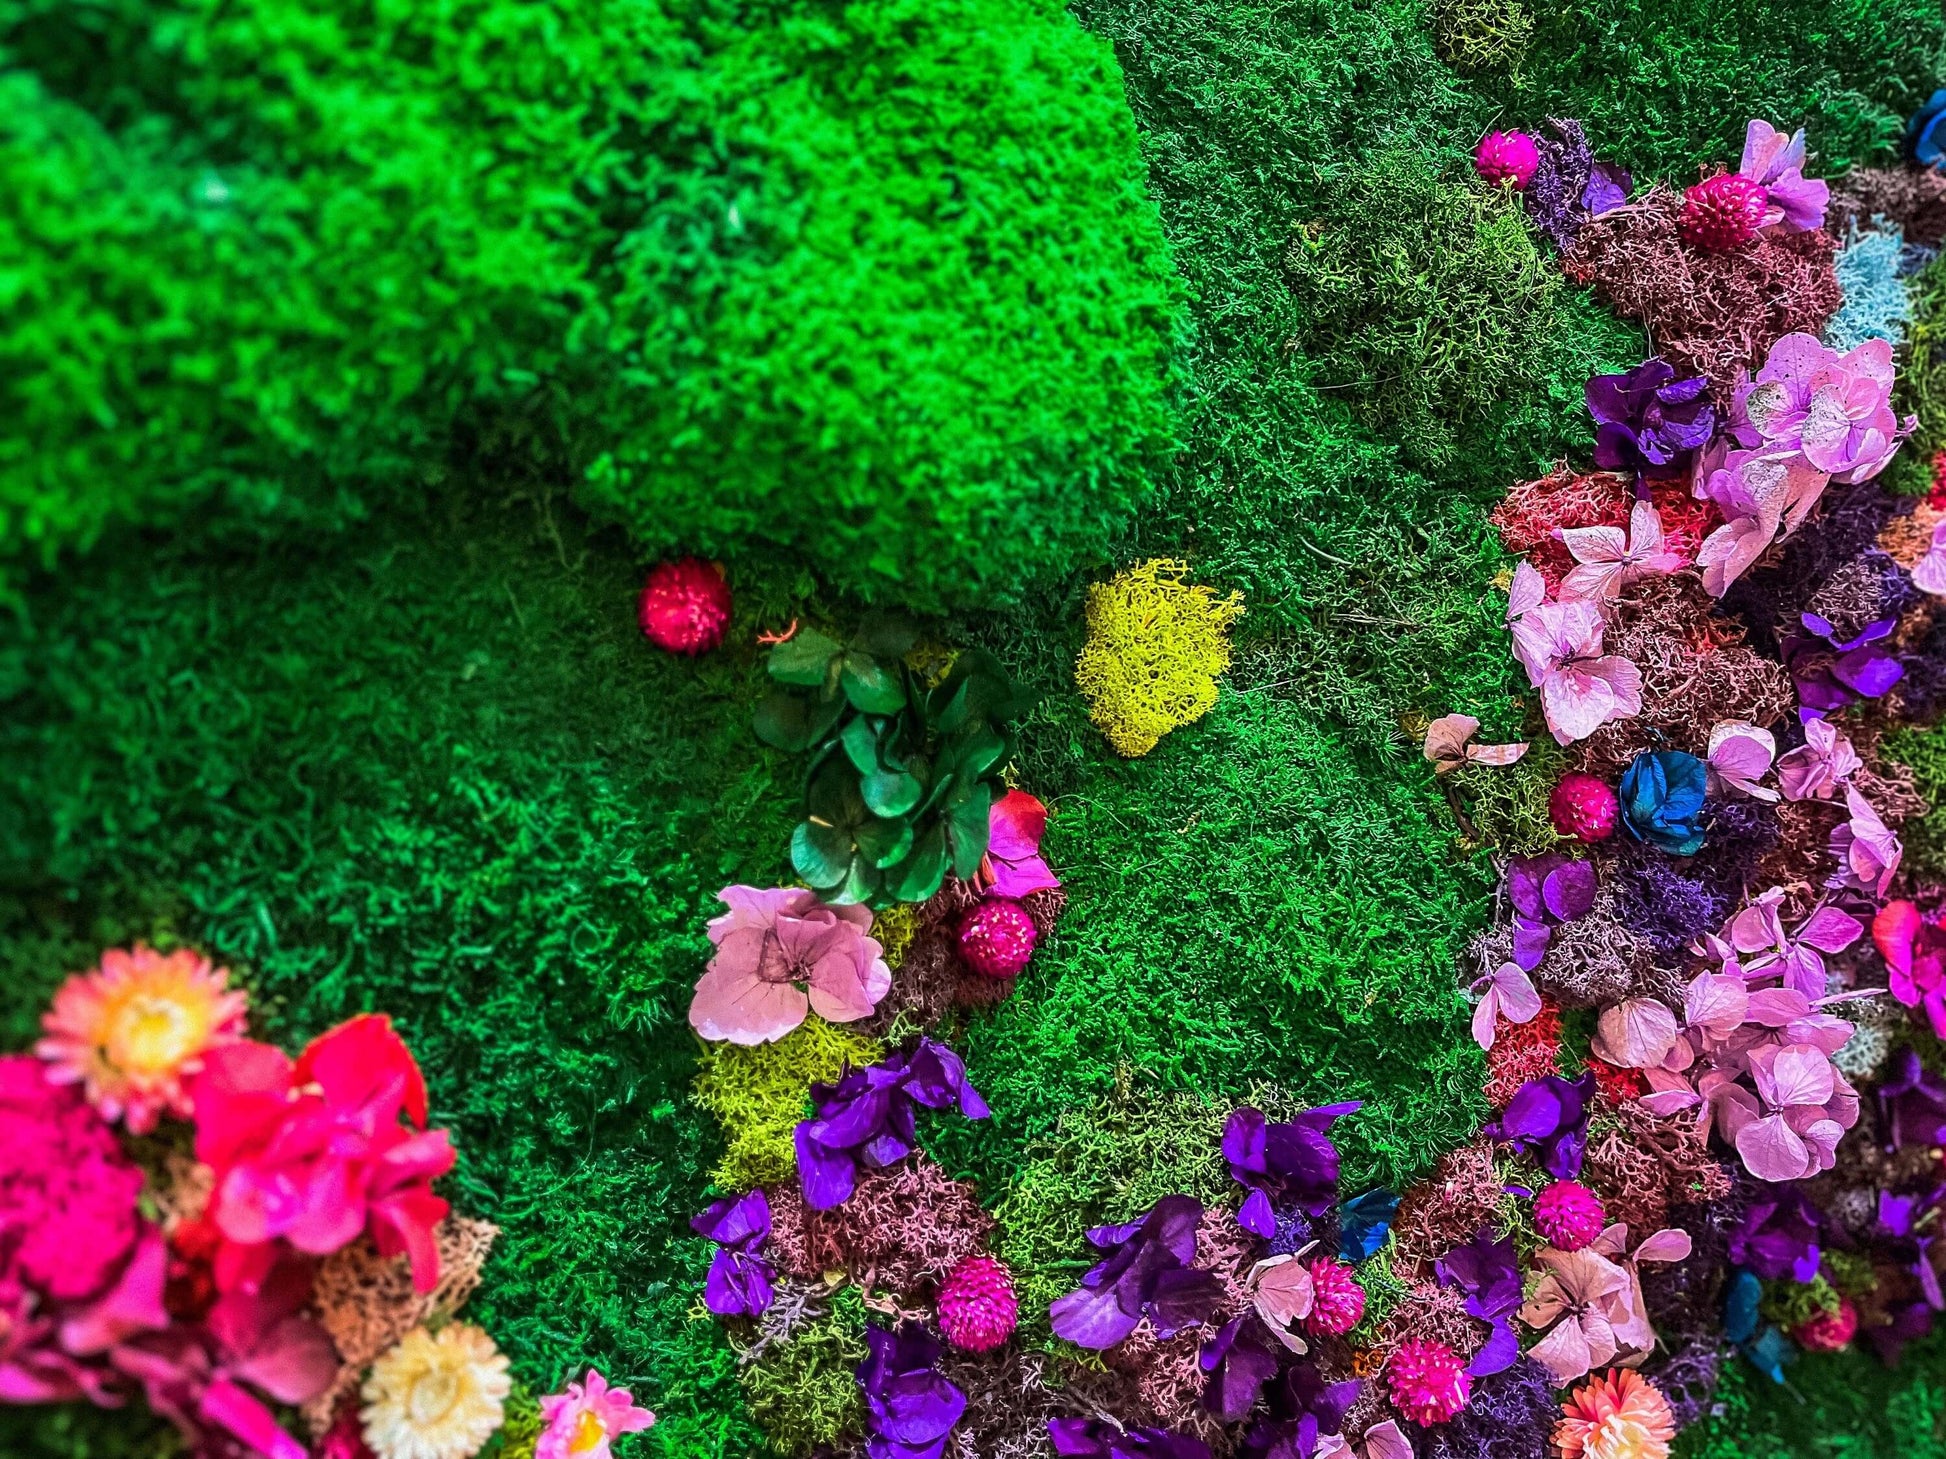 Rainbow Moss wall art with flowers